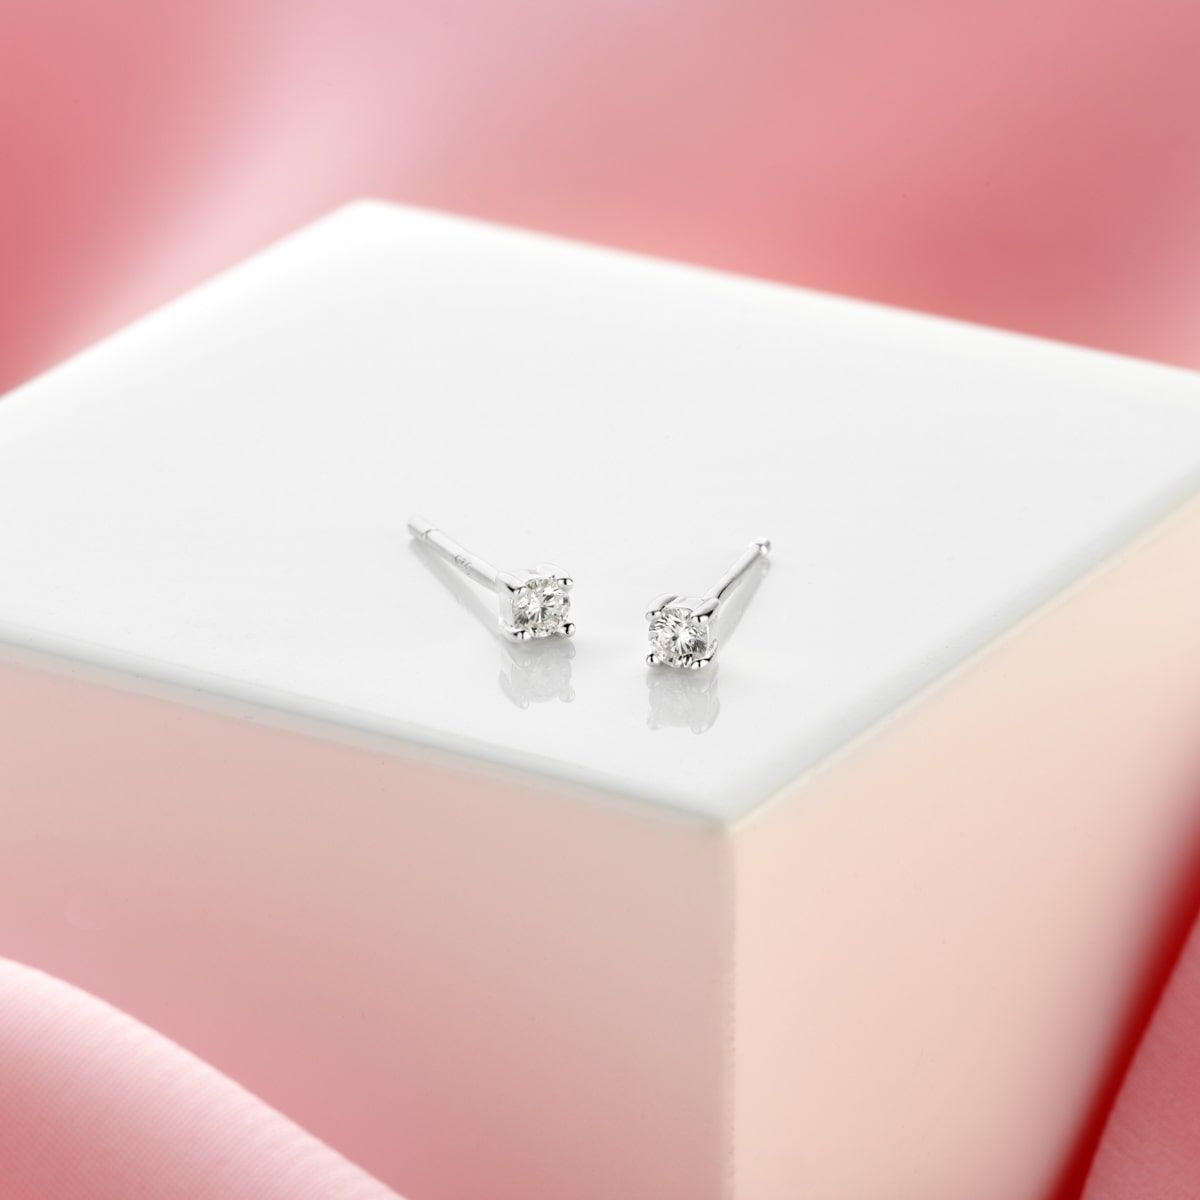 Heirloom Solitaire Diamond Silver Earrings